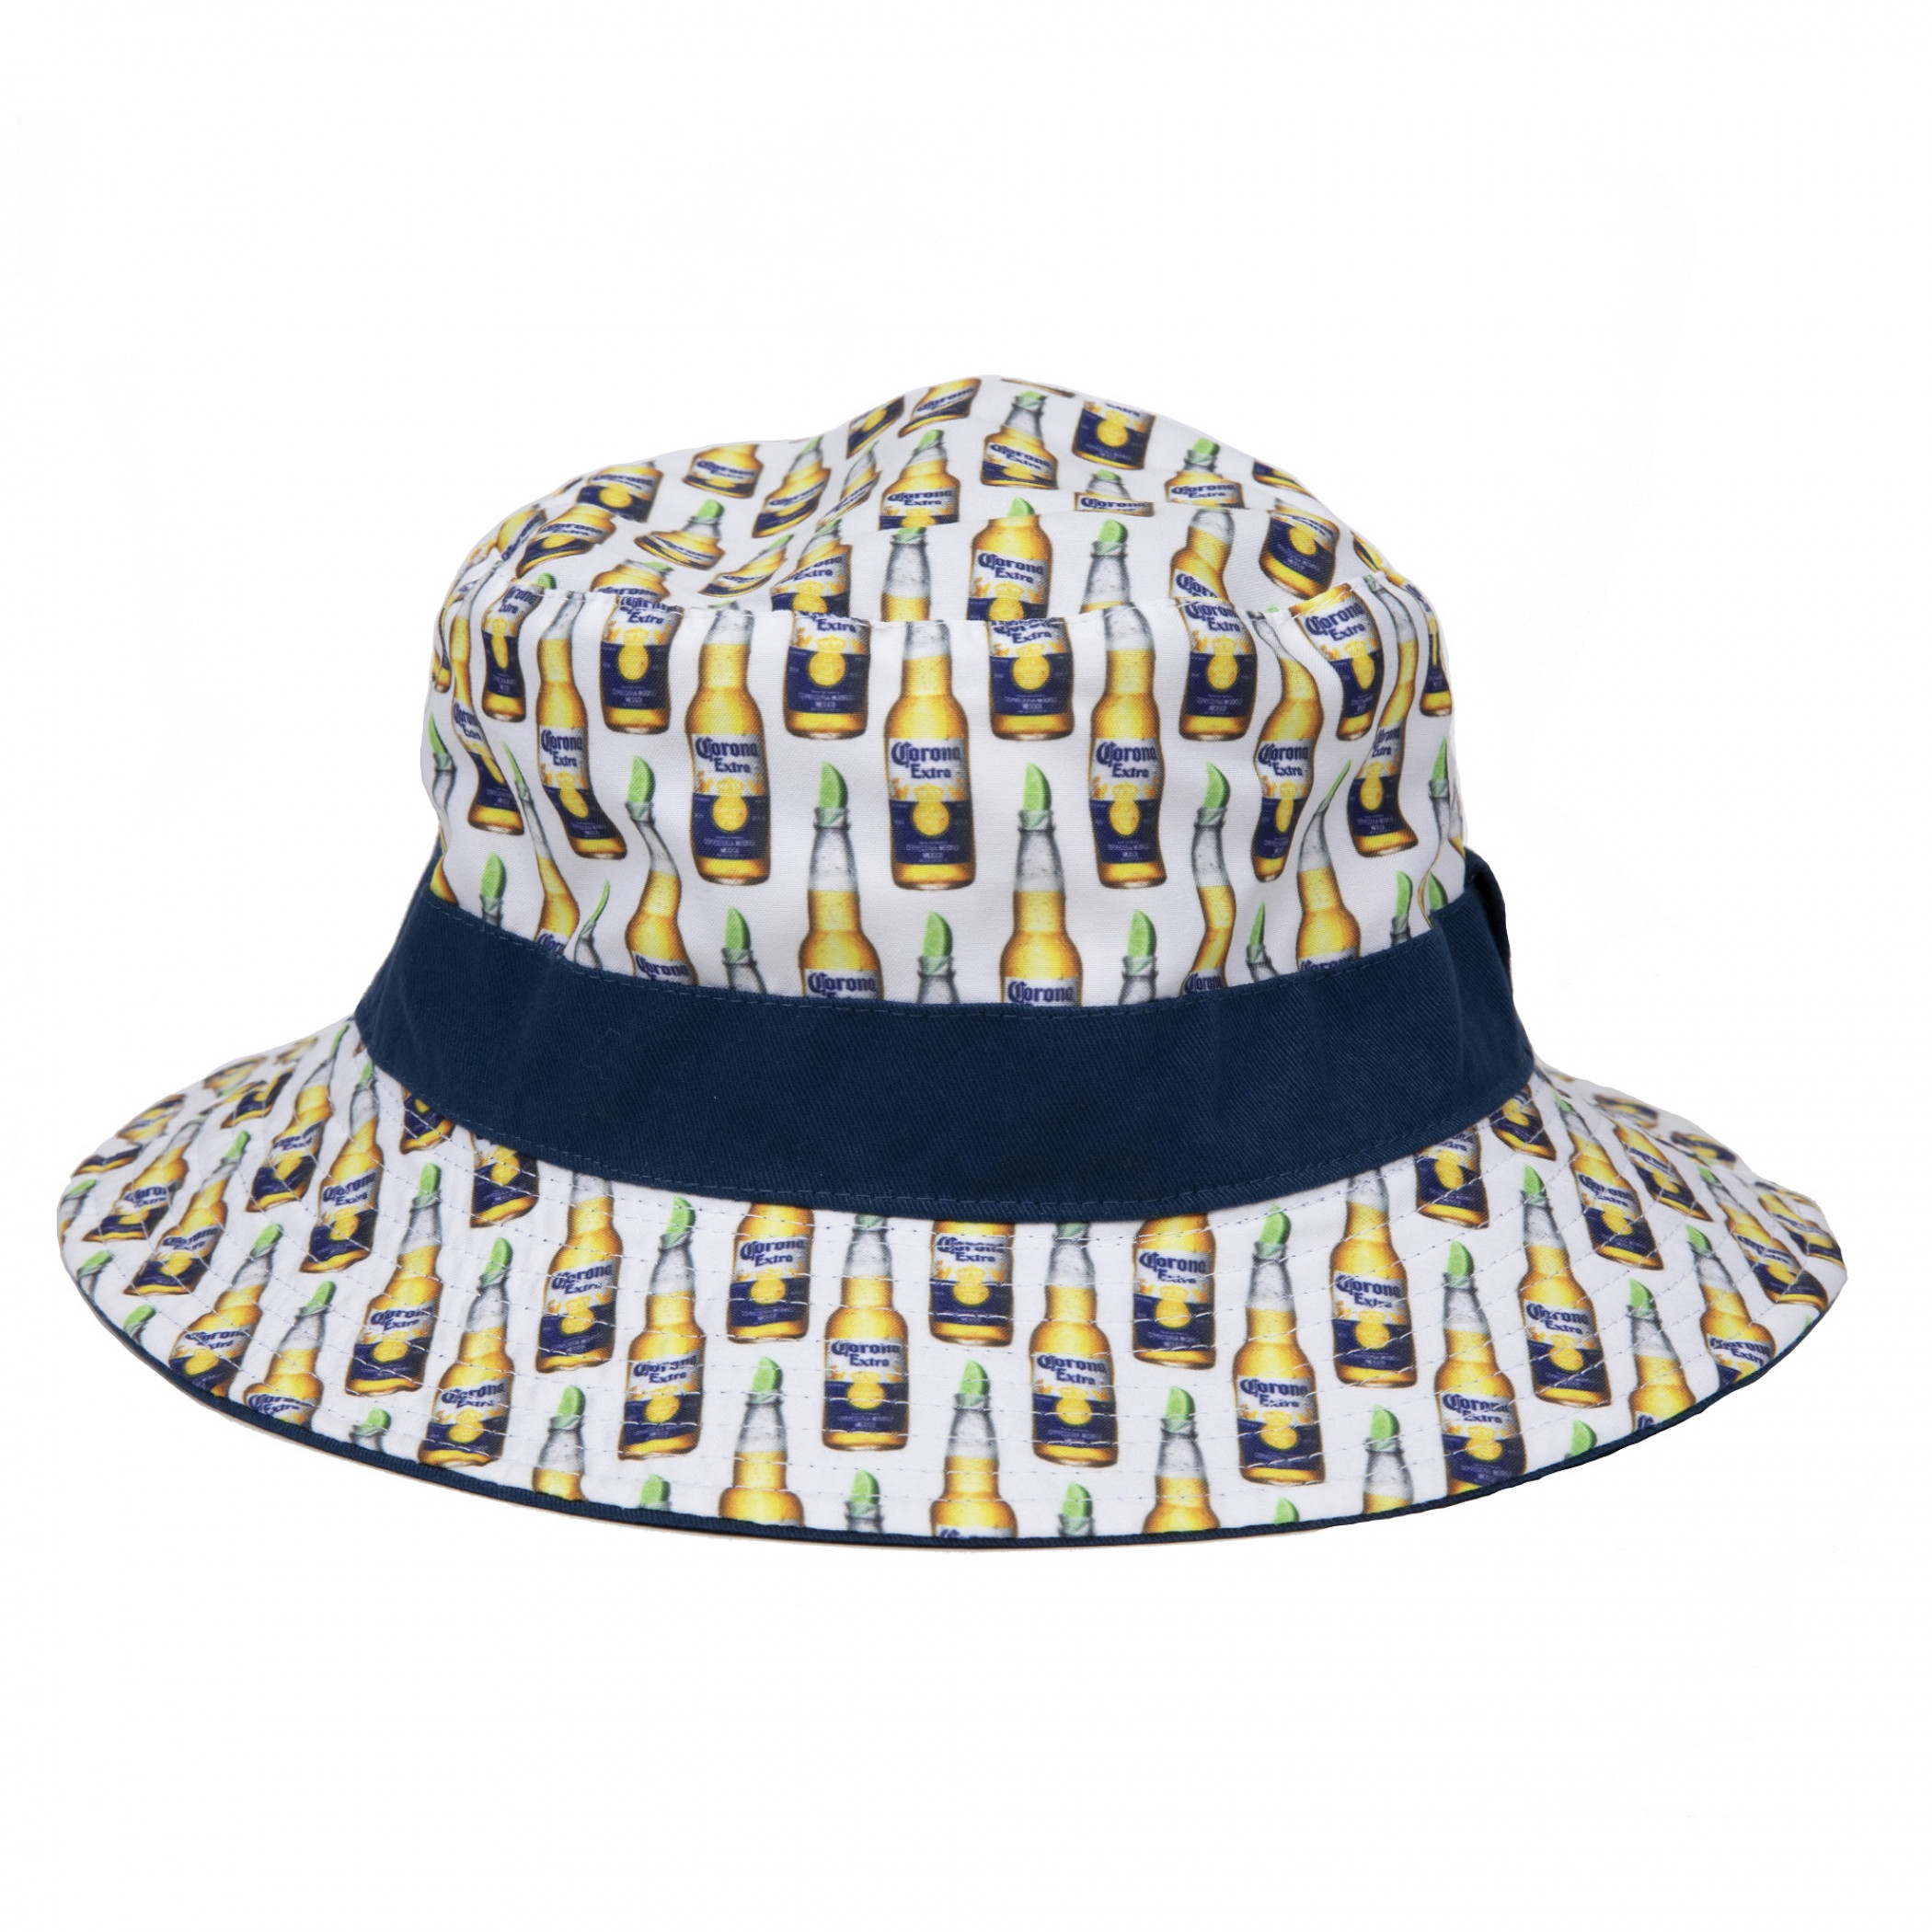 Corona Extra Logo Reversible Bucket Hat